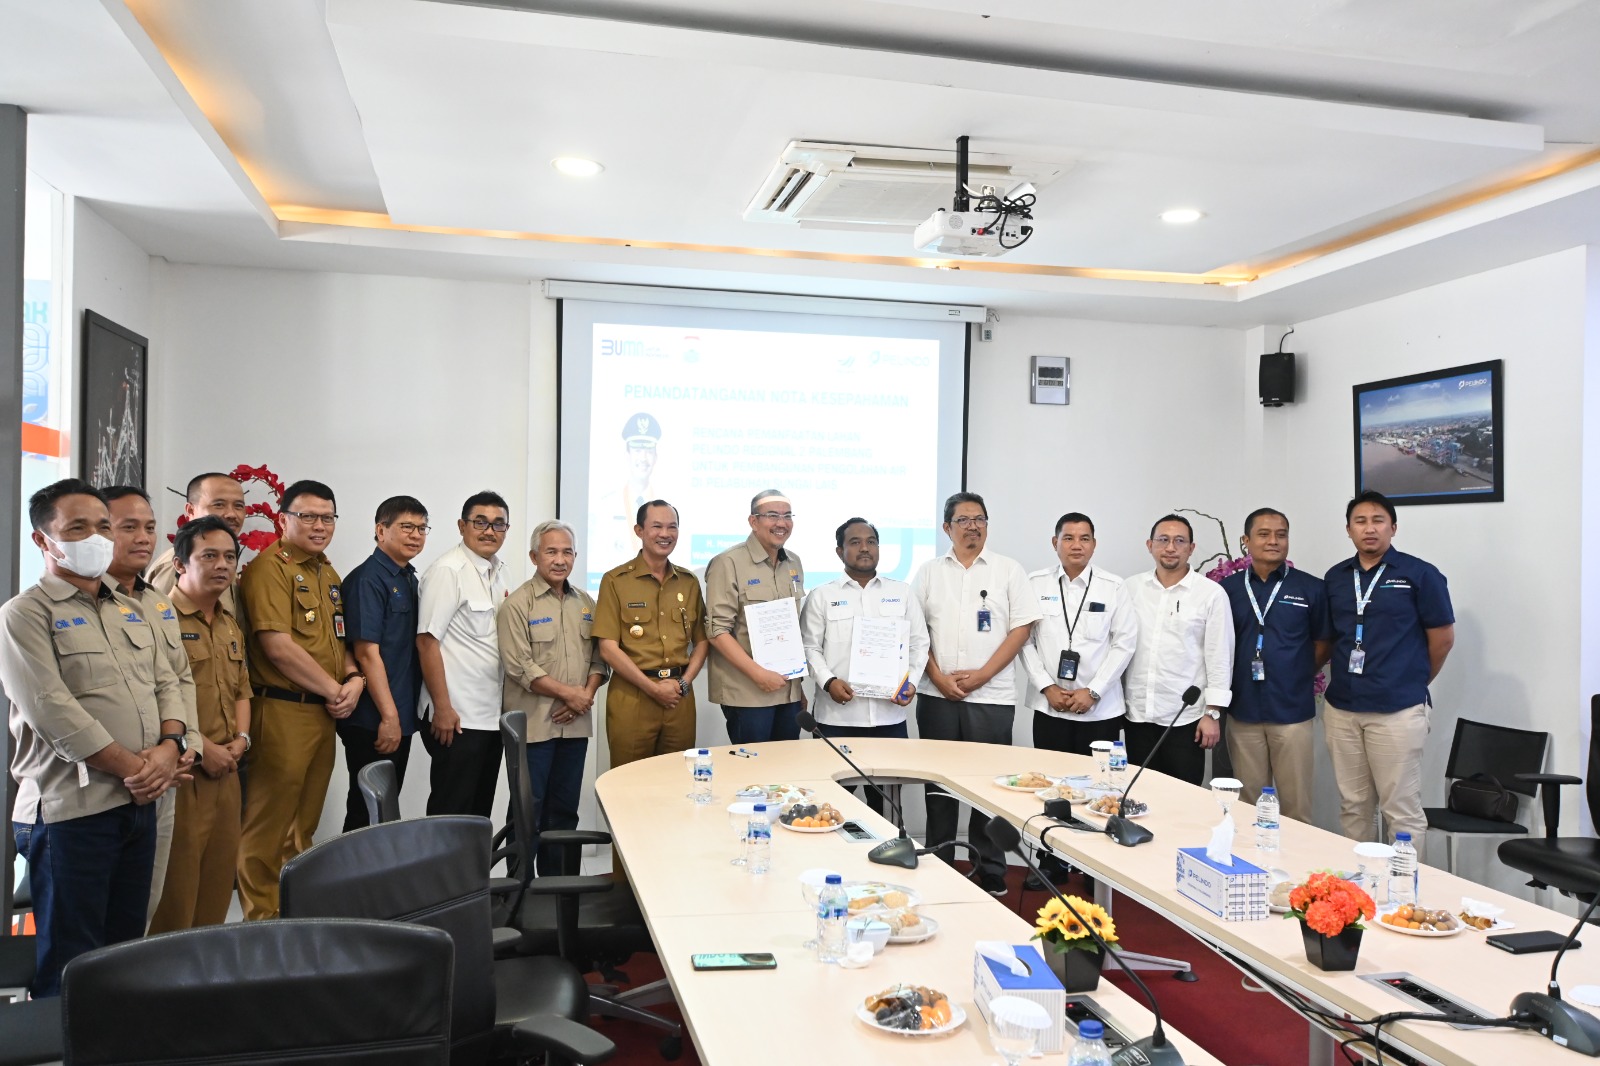 Sinergi Pelindo Regional 2 dalam Penyediaan Air Bersih Bersama Tirta Musi Palembang